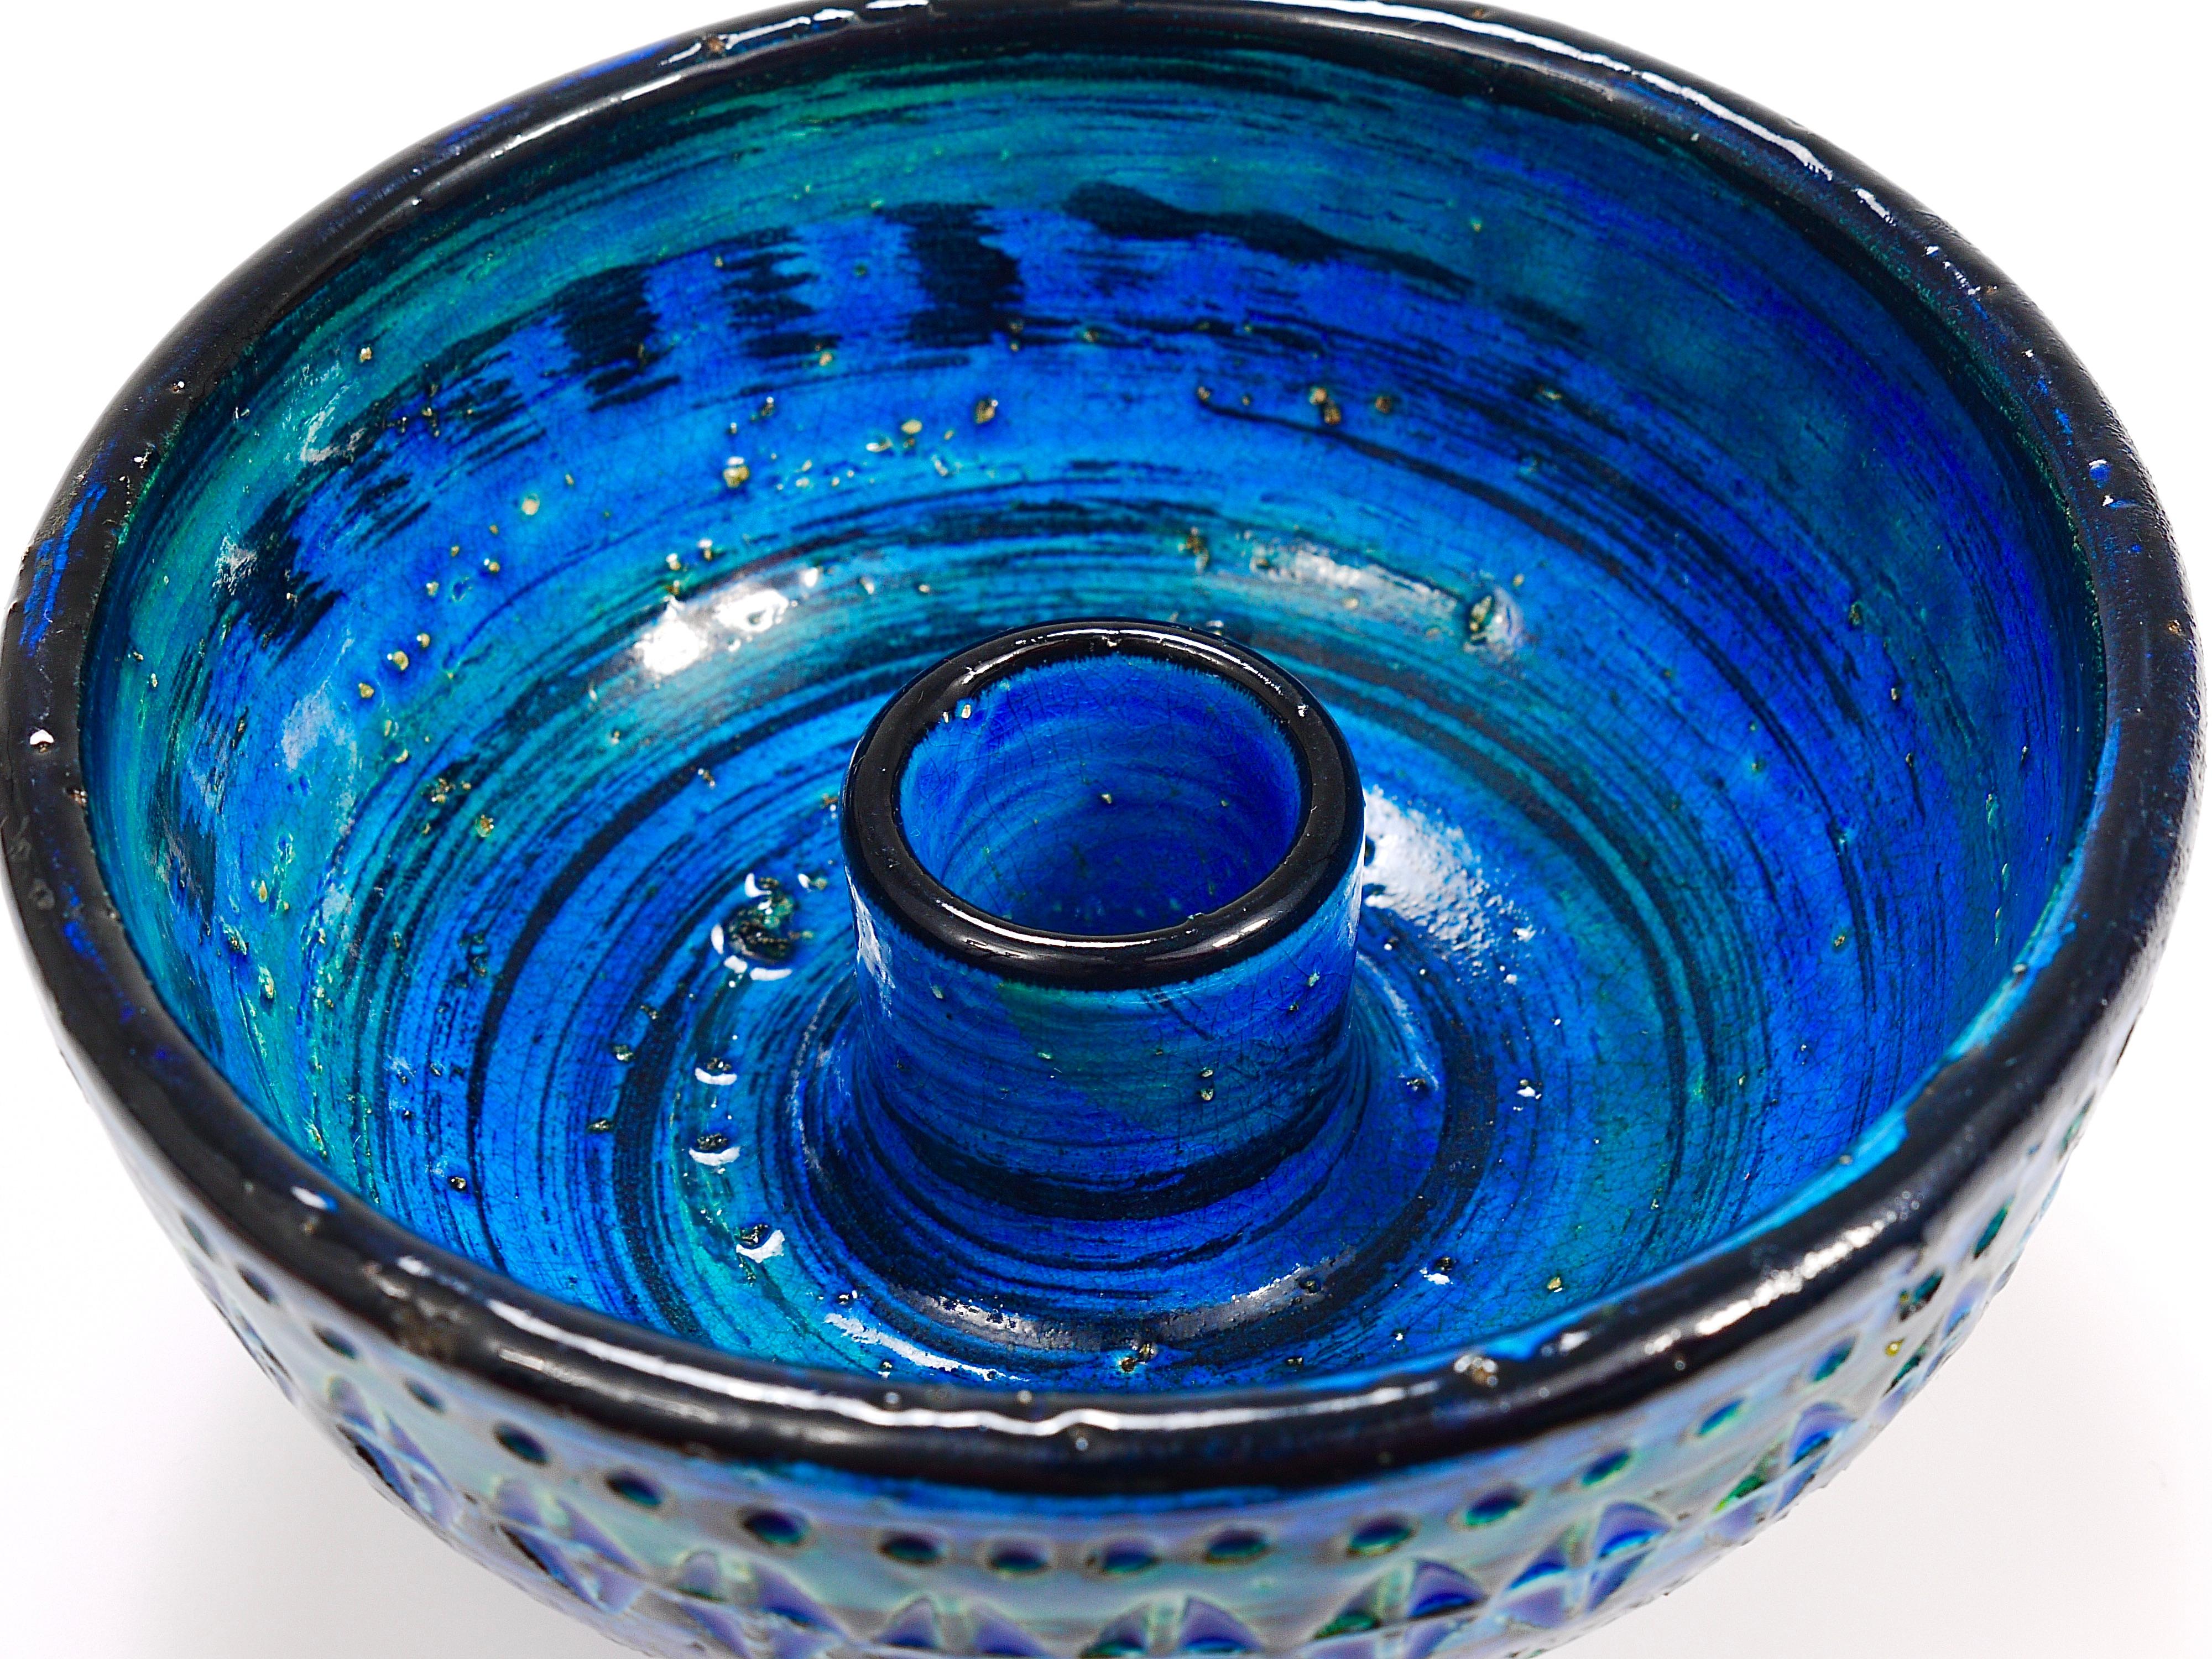 Aldo Londi Bitossi Rimini Blue Glazed Midcentury Candle Holder Bowl, 1950s For Sale 1